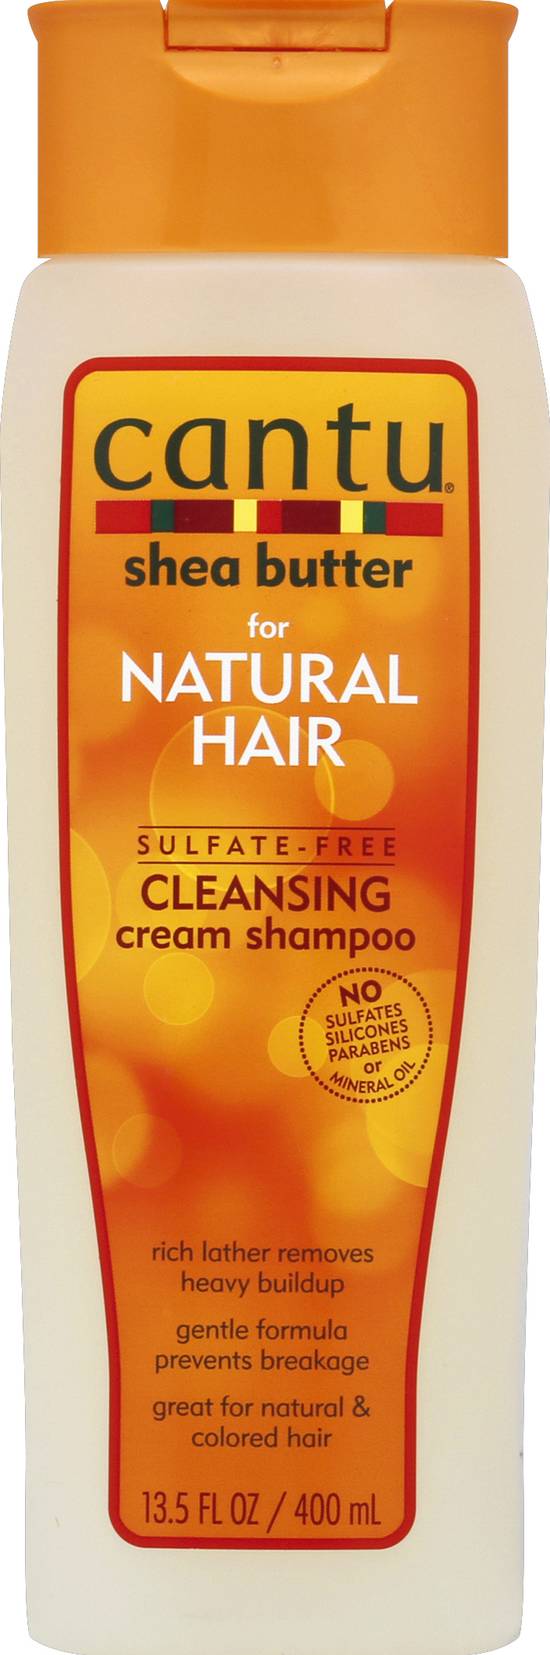 Cantu Shea Butter Sulfate-Free Cream Shampoo